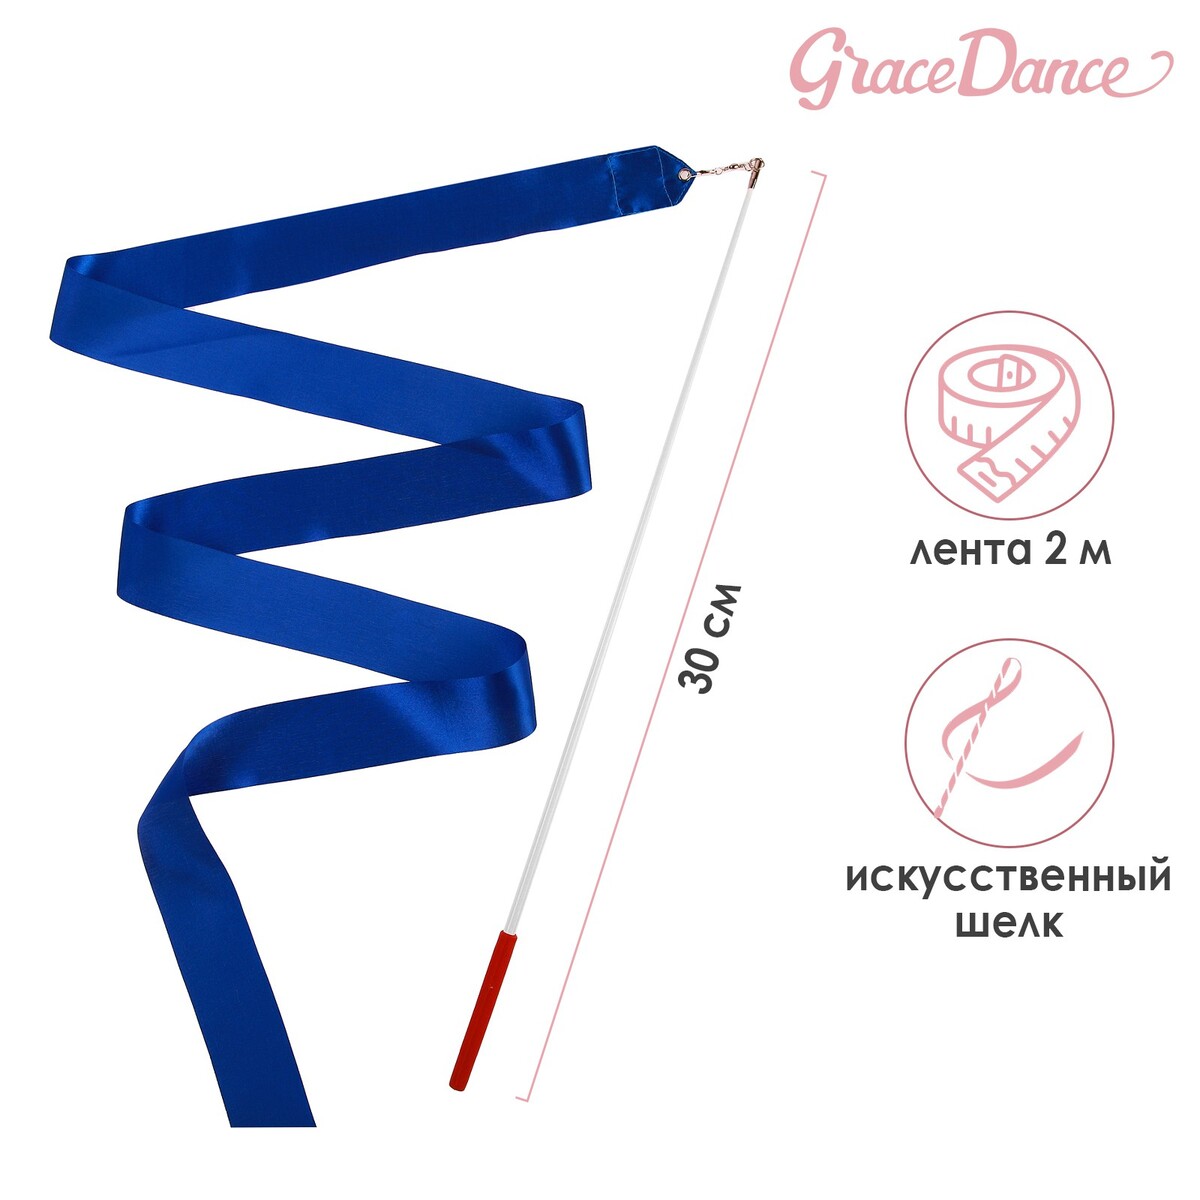 Лента для художественной гимнастики с палочкой grace dance, 2 м, цвет синий лента гимнастическая с палочкой grace dance 4 м фуксия